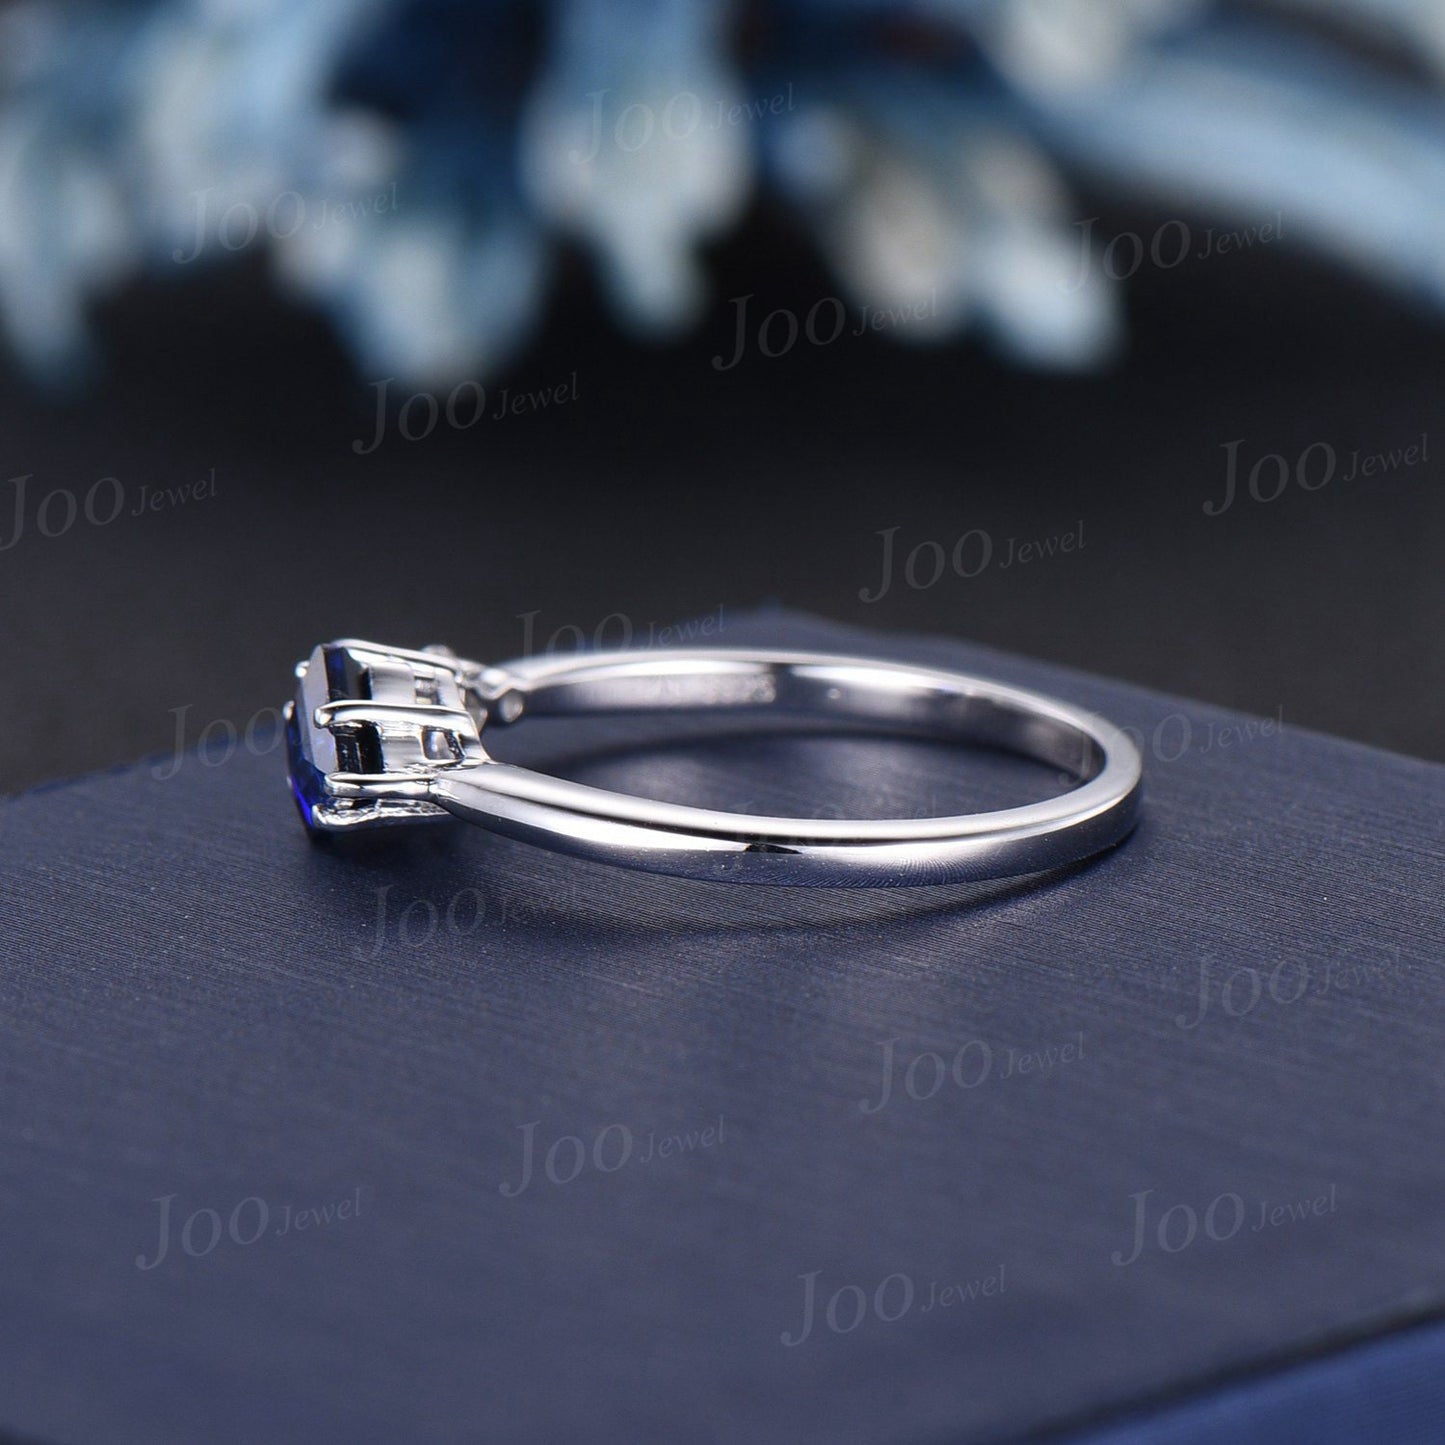 Unique September Birthstone Promise Ring Kite Shaped Blue Sapphire Engagement Rings Peridot Moissanite Three Stone Minimalist Wedding Ring